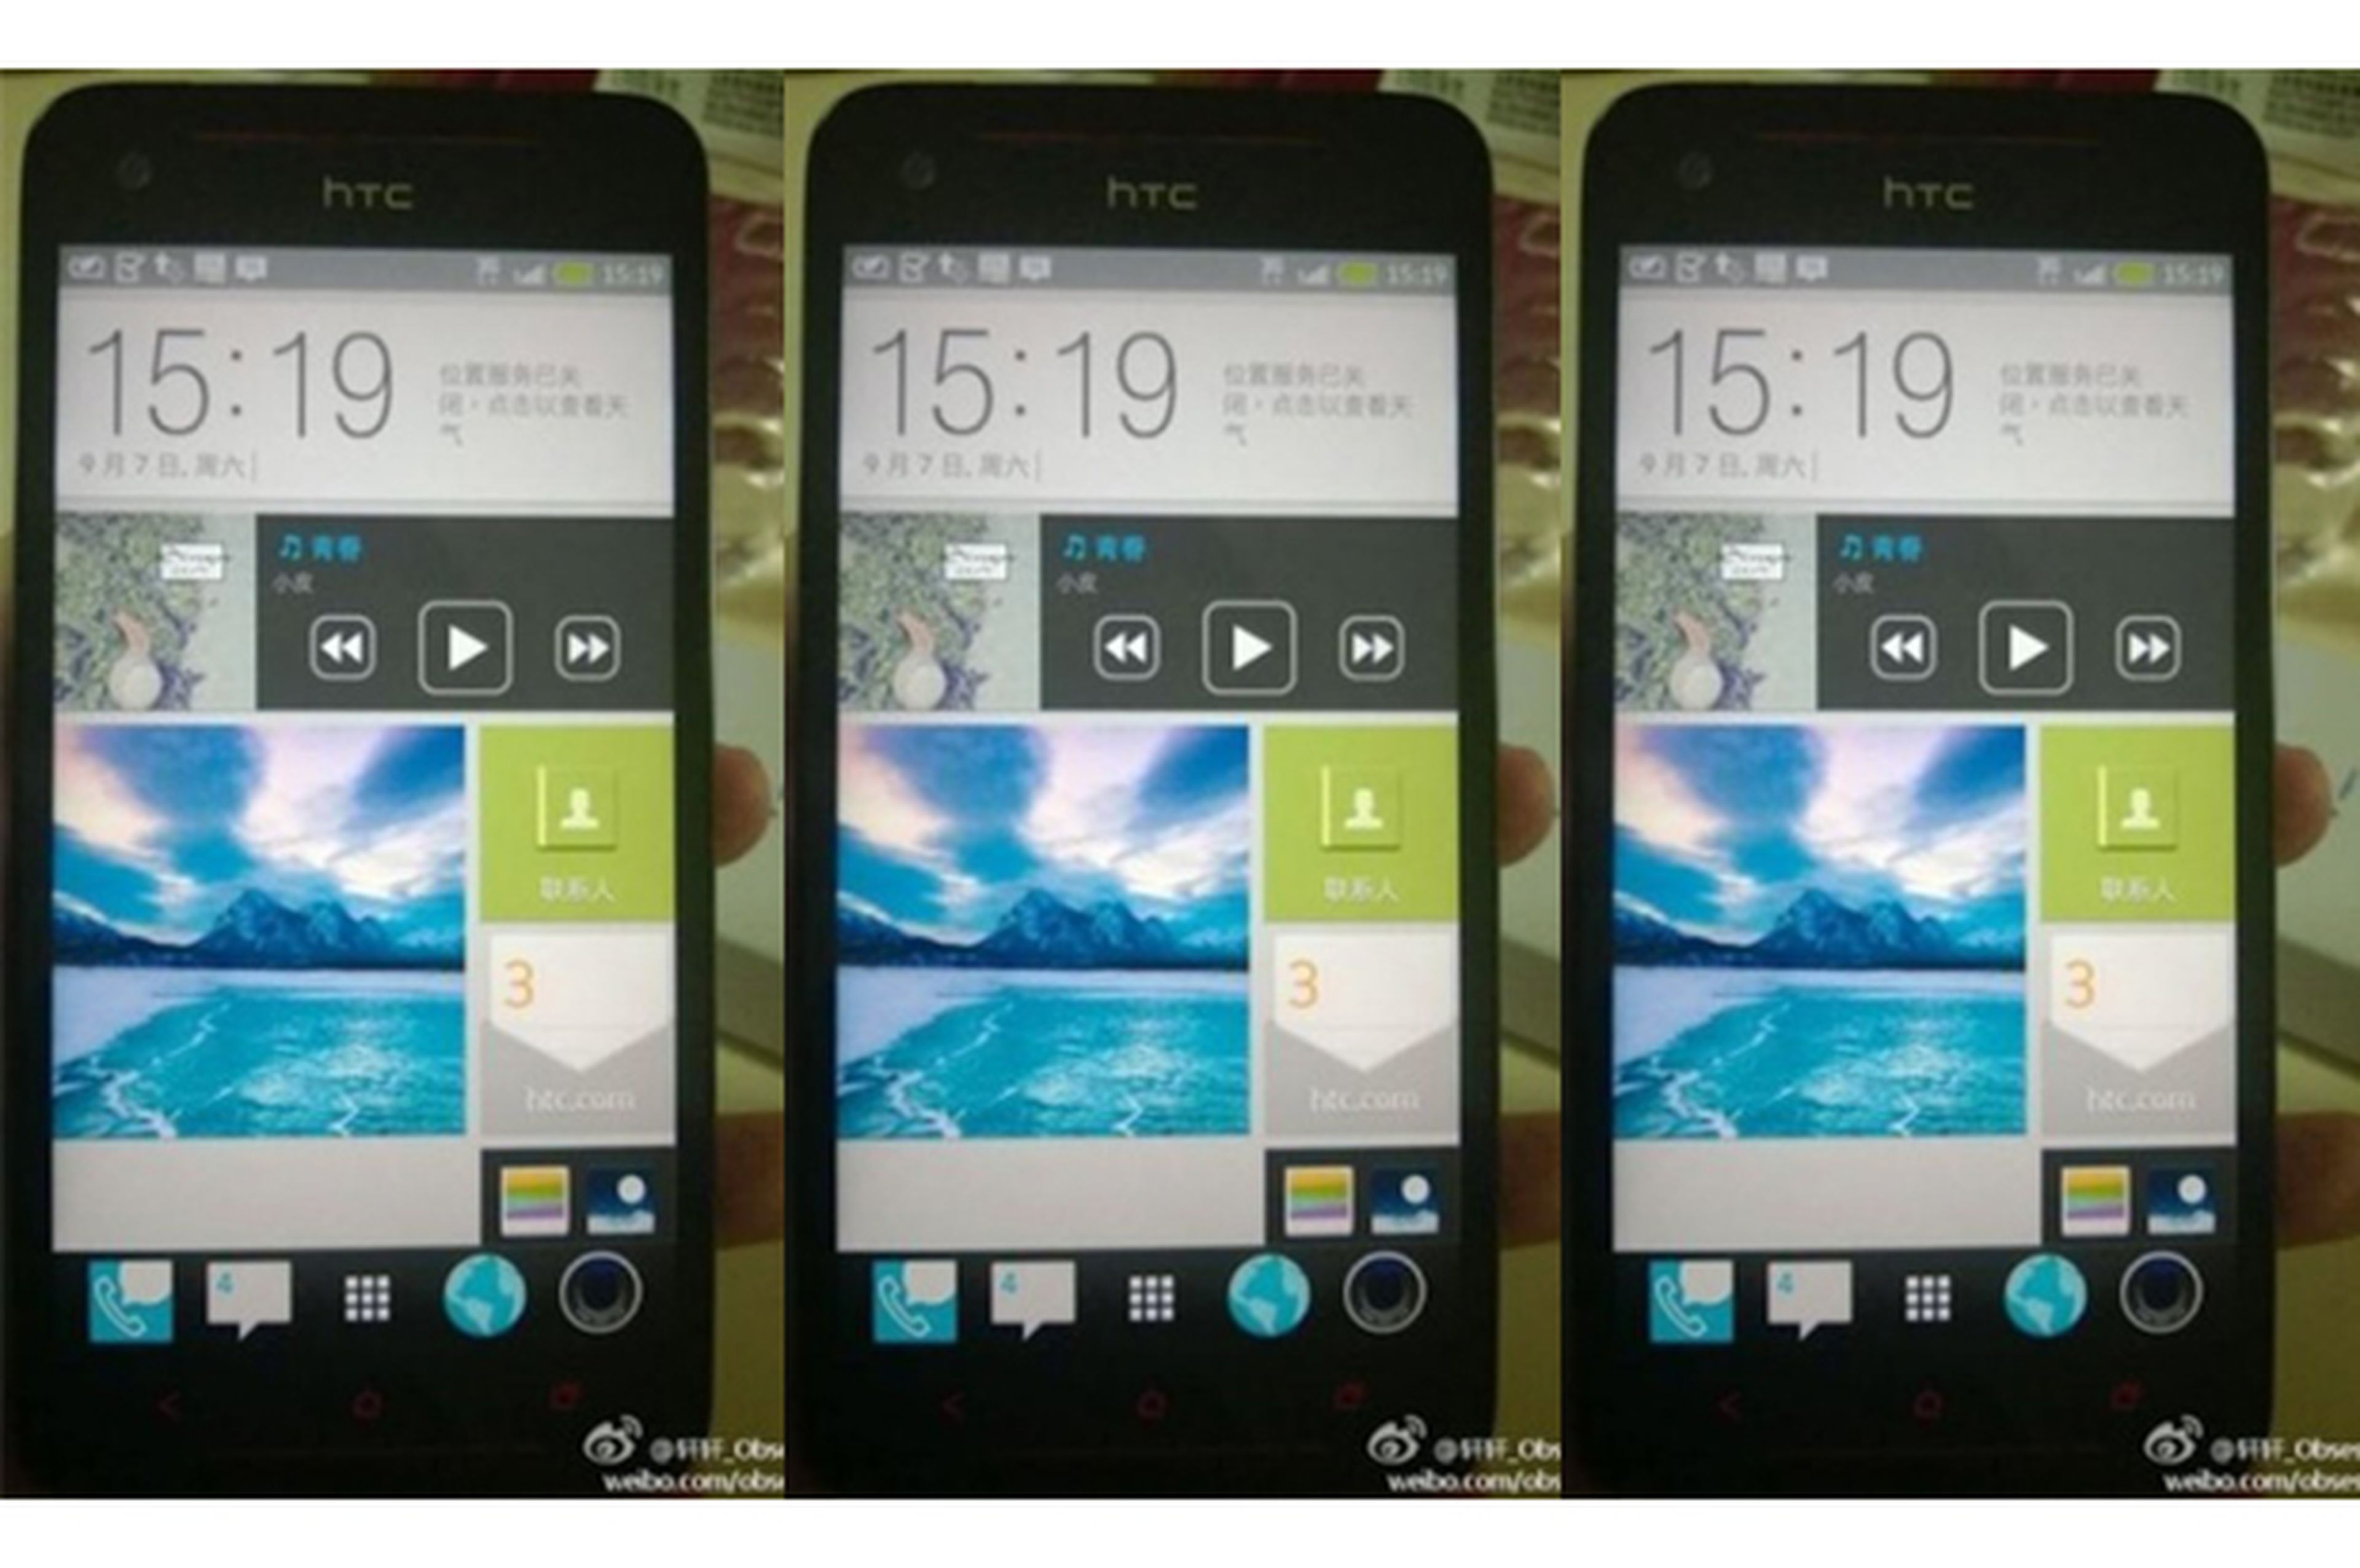 HTC Sense 5.5, filtrada la primera imagen de su interfaz